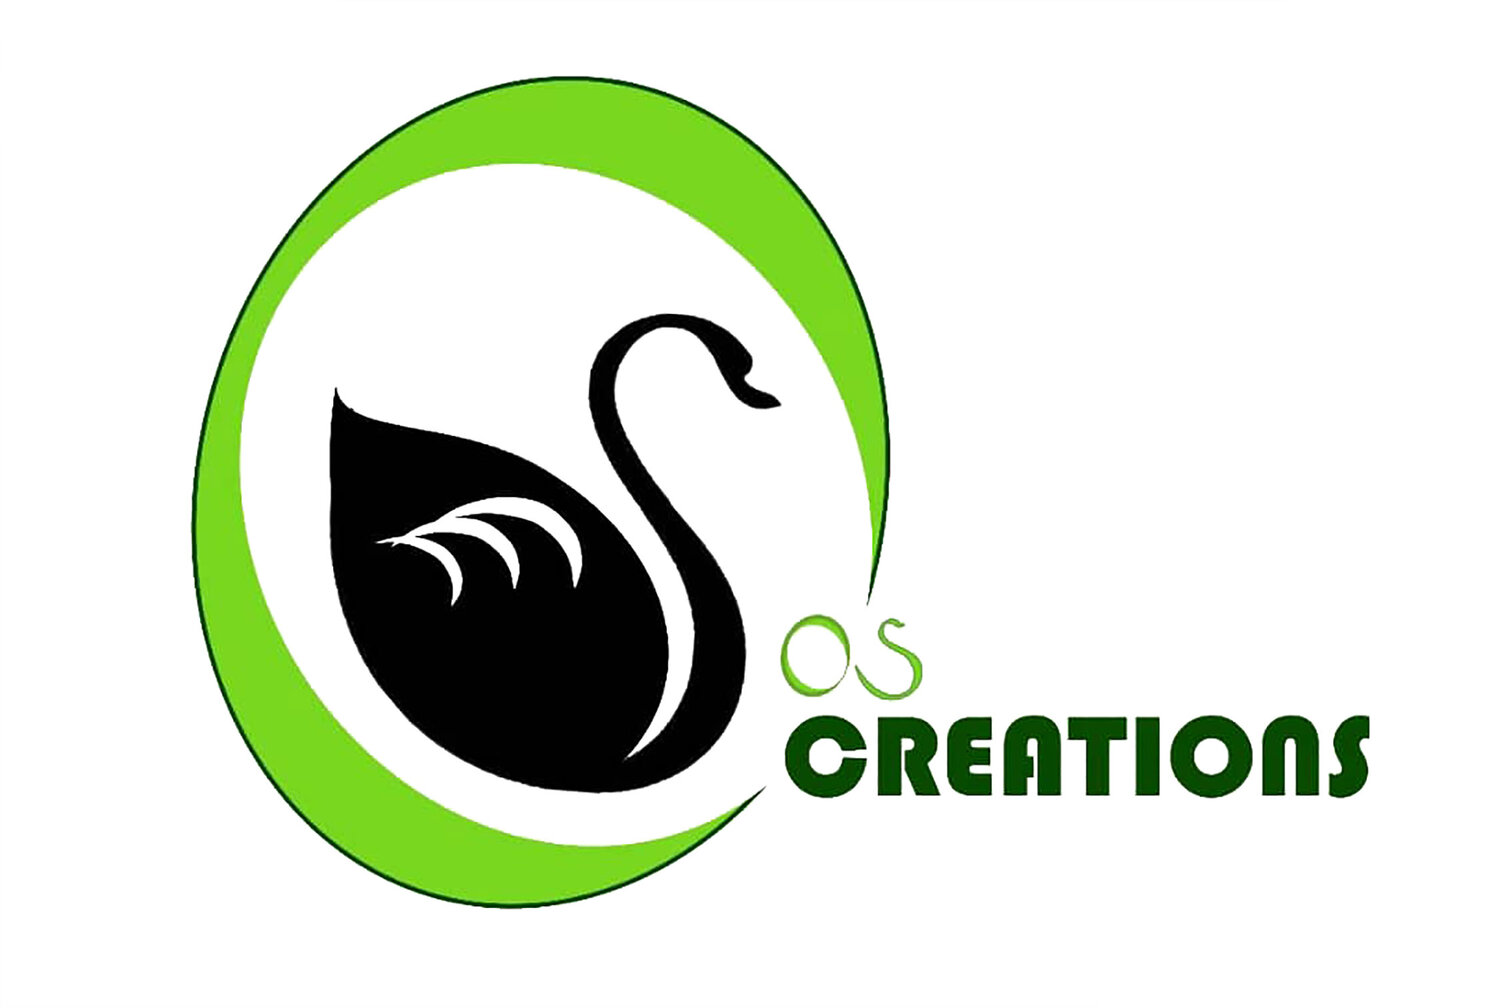 OS Creations